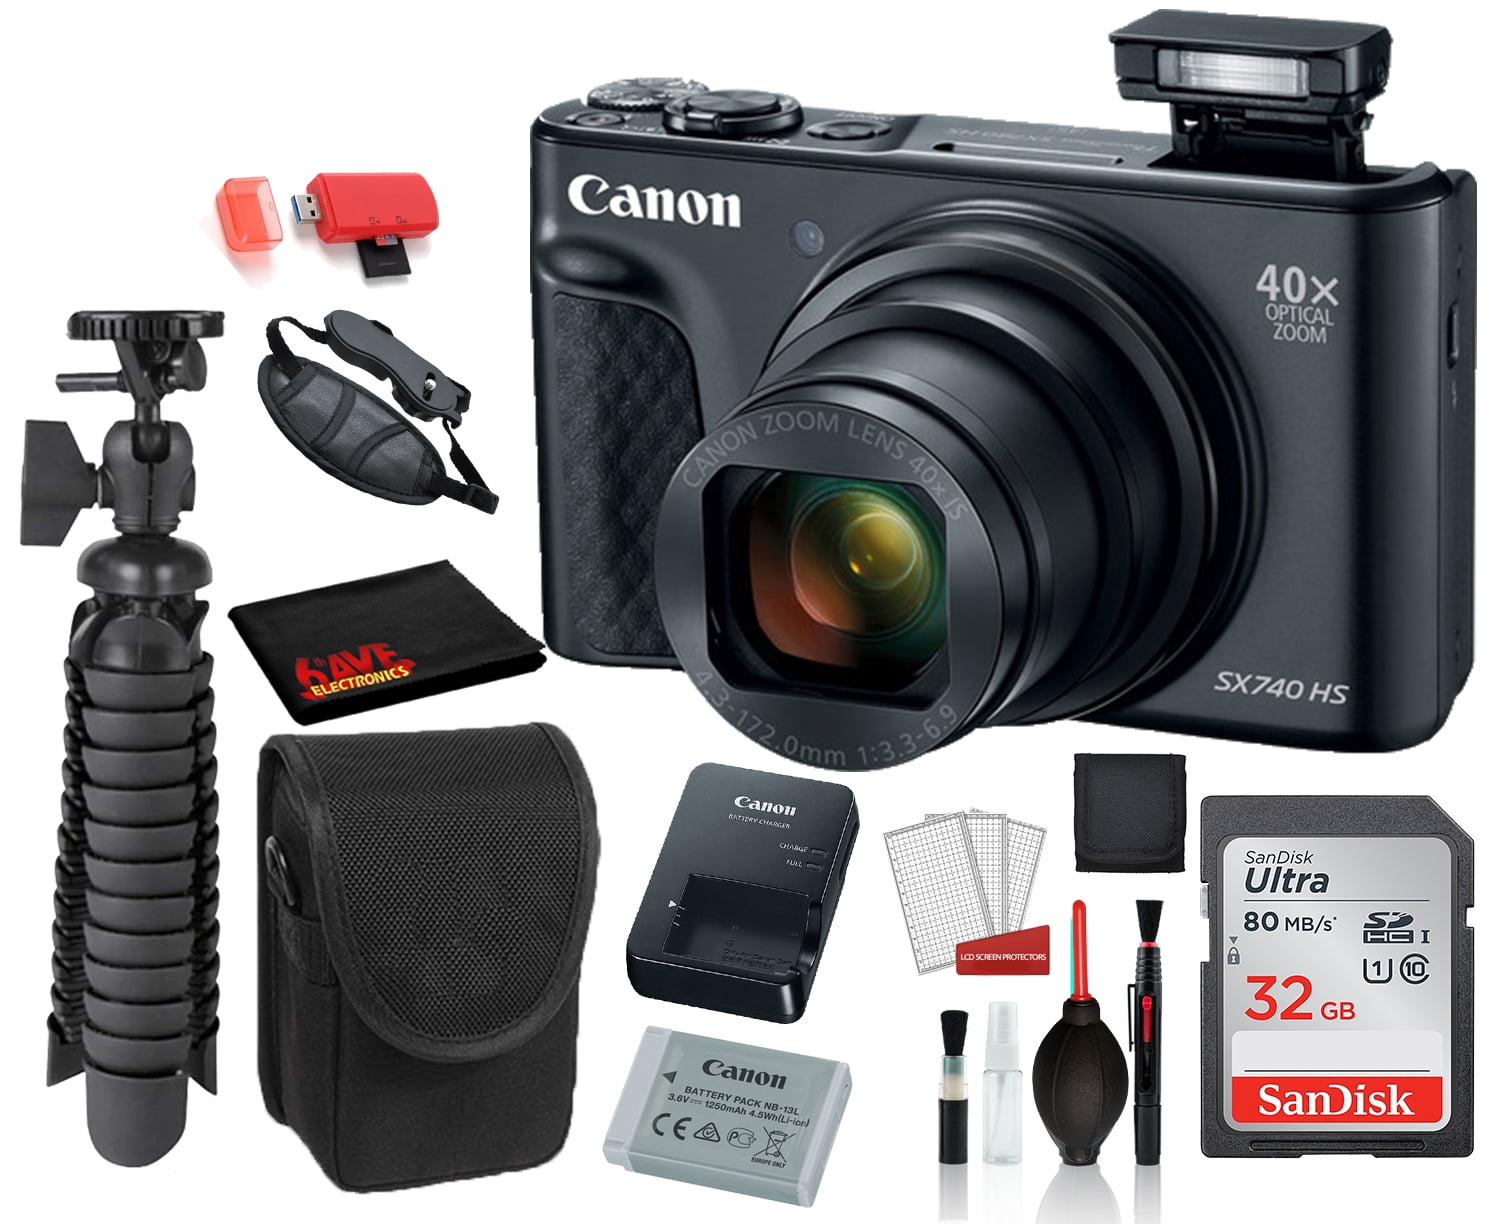 Canon PowerShot SX740 HS Digital Camera (Black) (2955C001